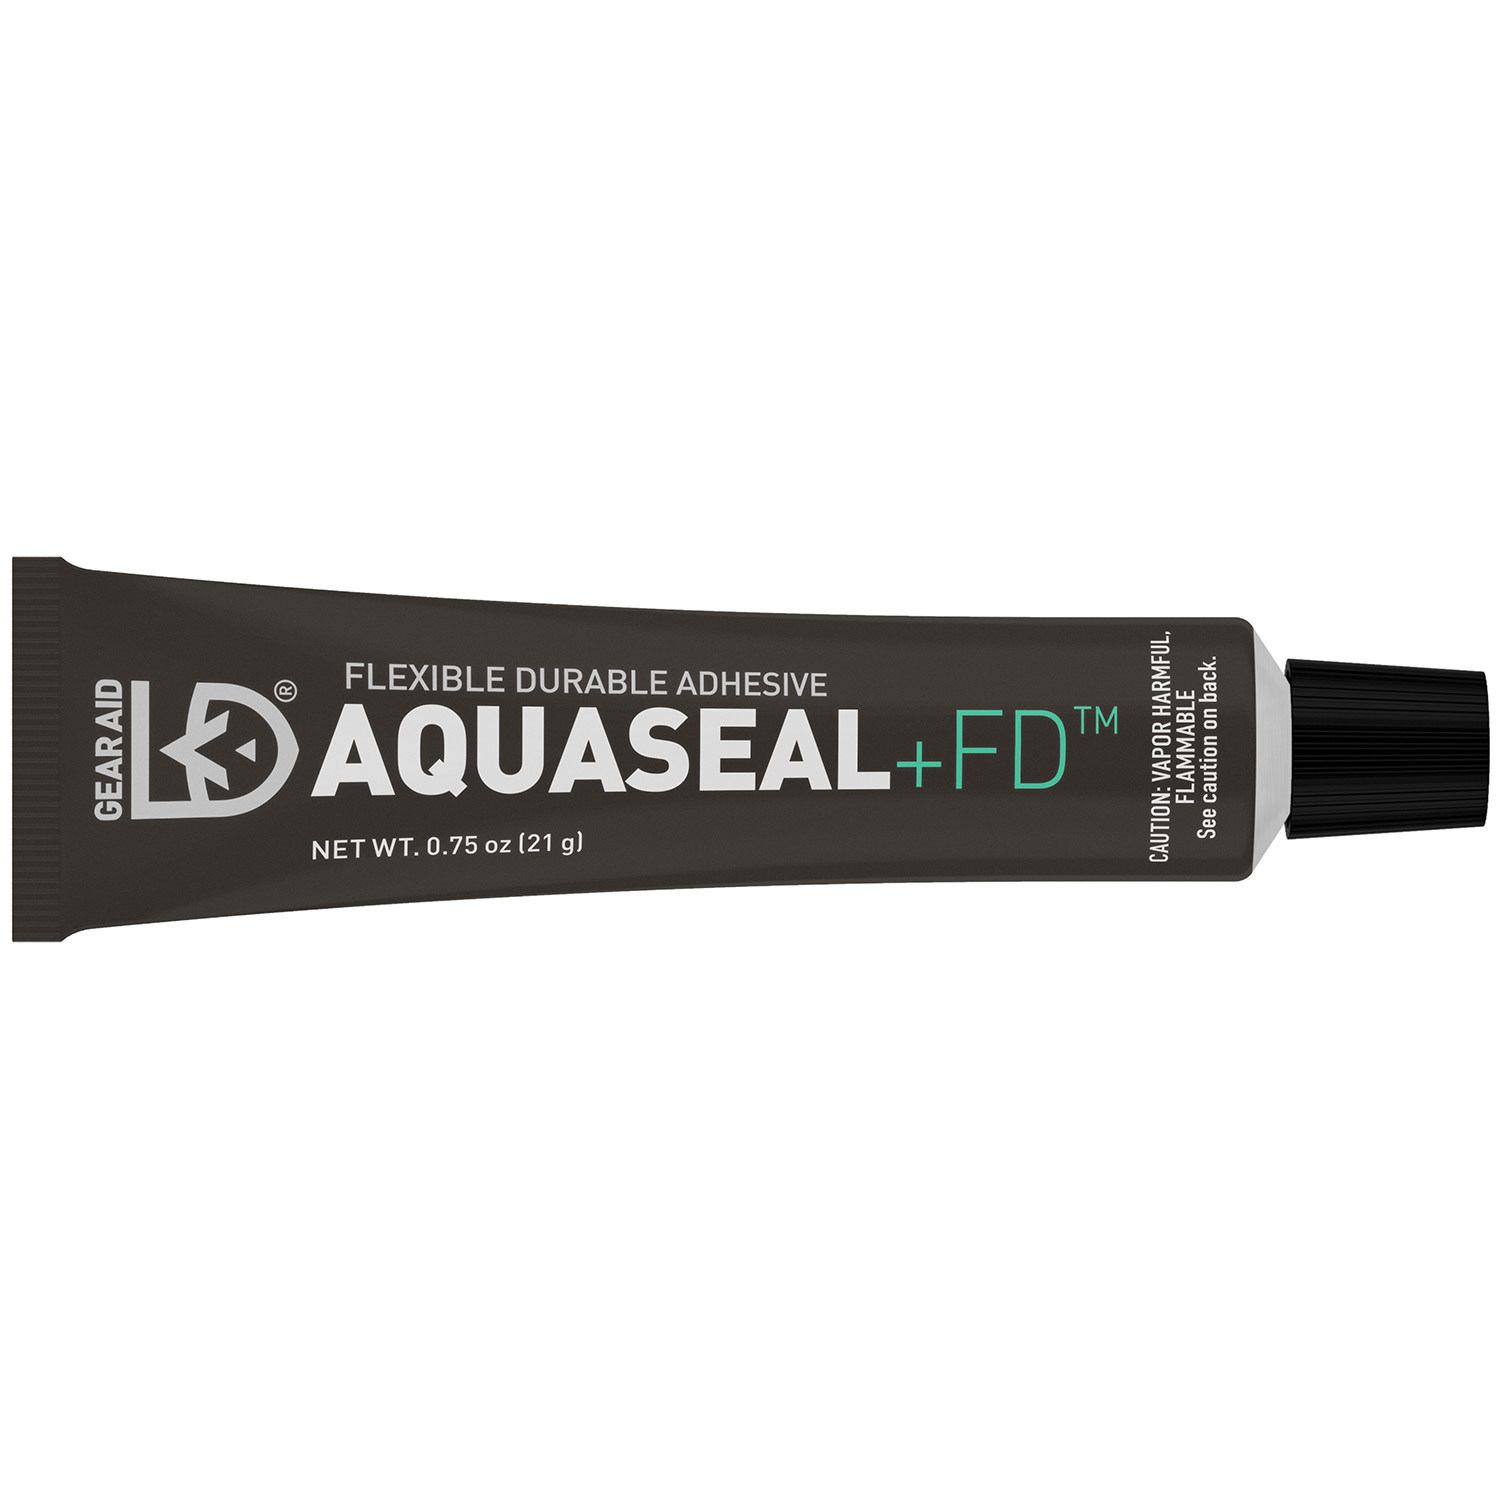 Aquaseal Gear Aid Aqua Seal +FD Gear Adhesive .25oz